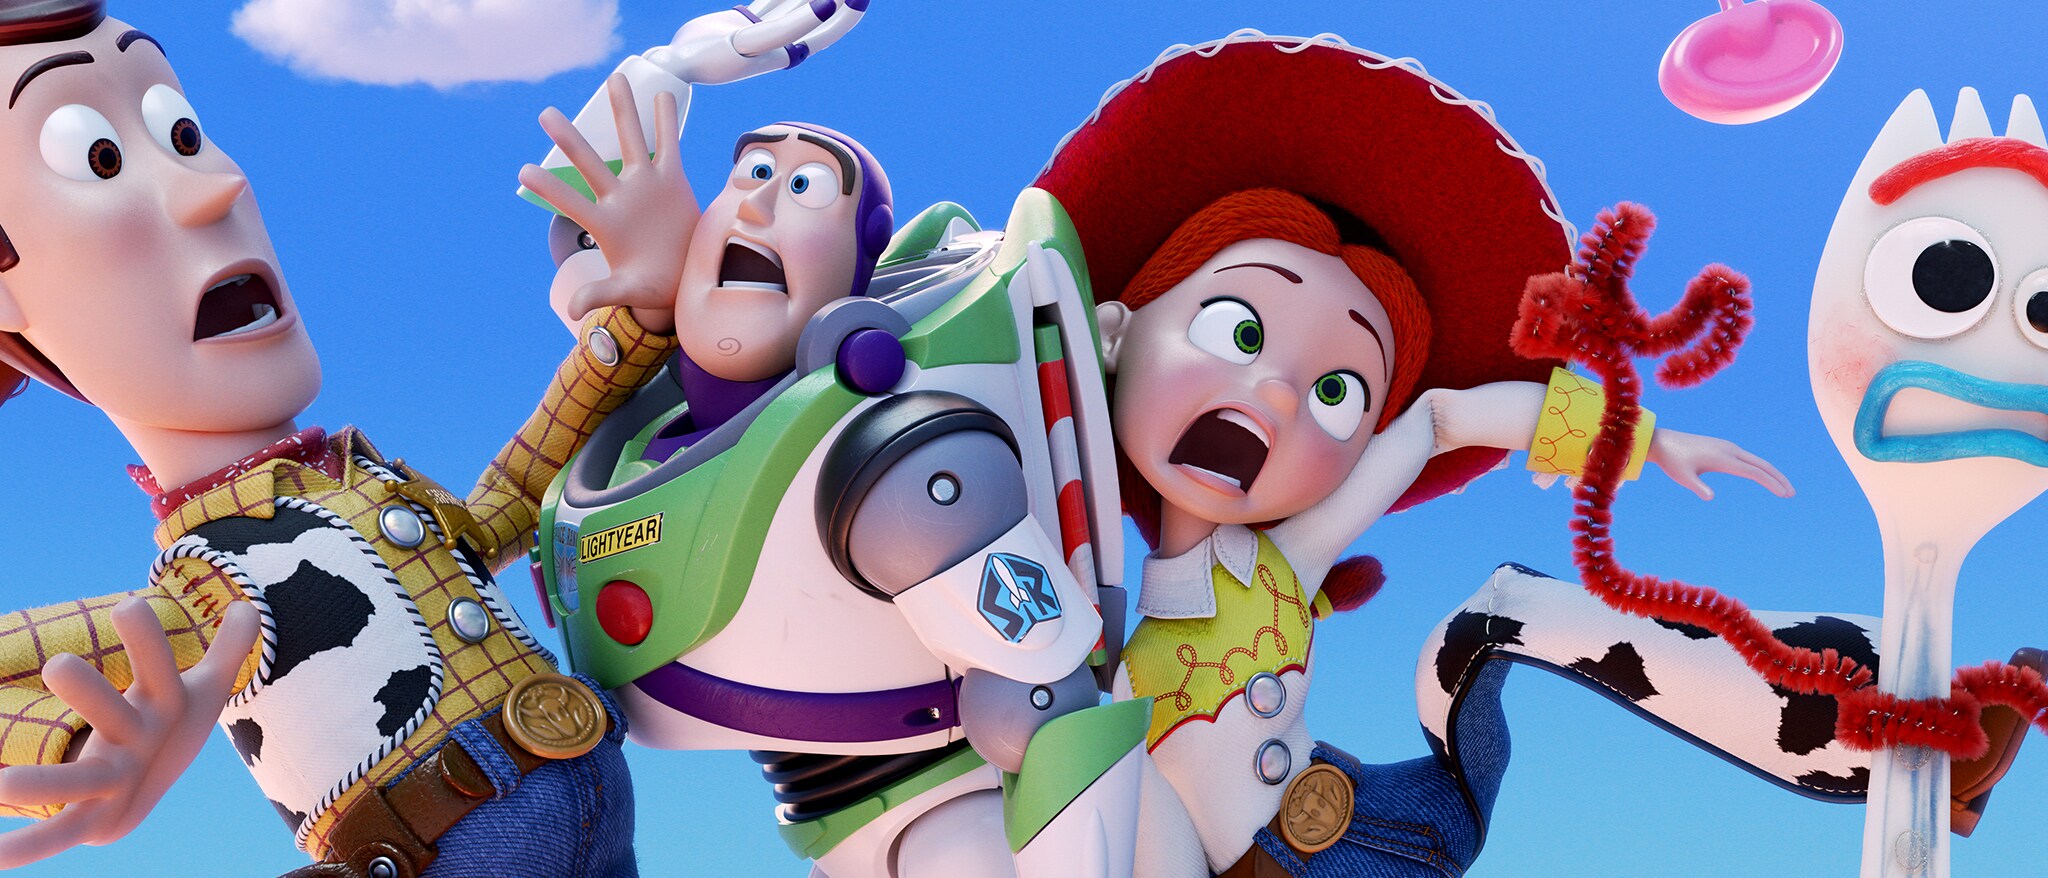 Toy Story 4 on Disney+